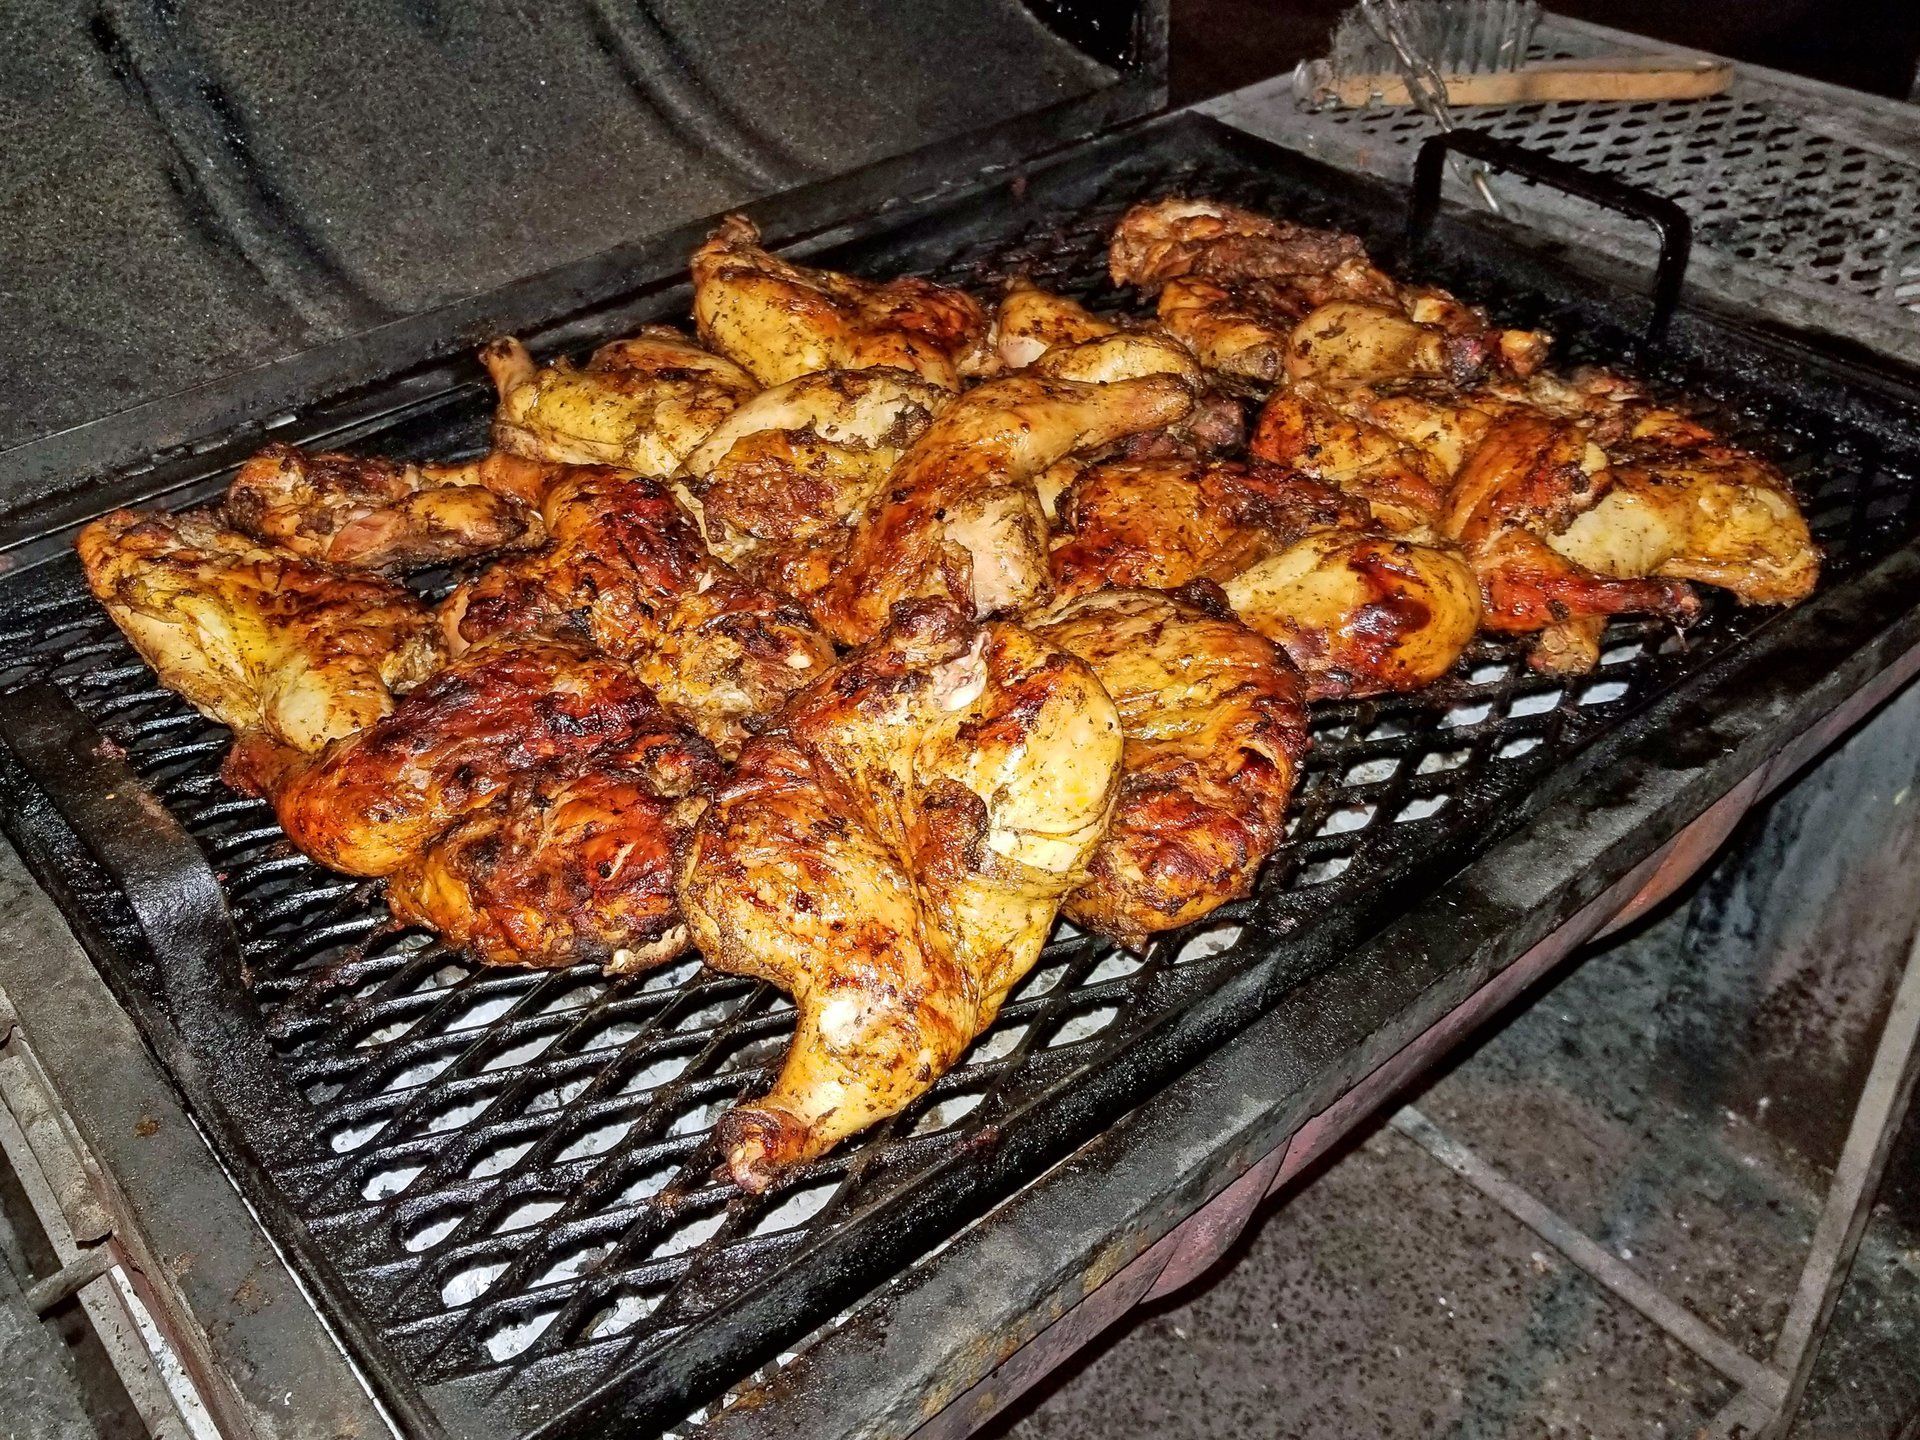 Jerk chicken on the grill